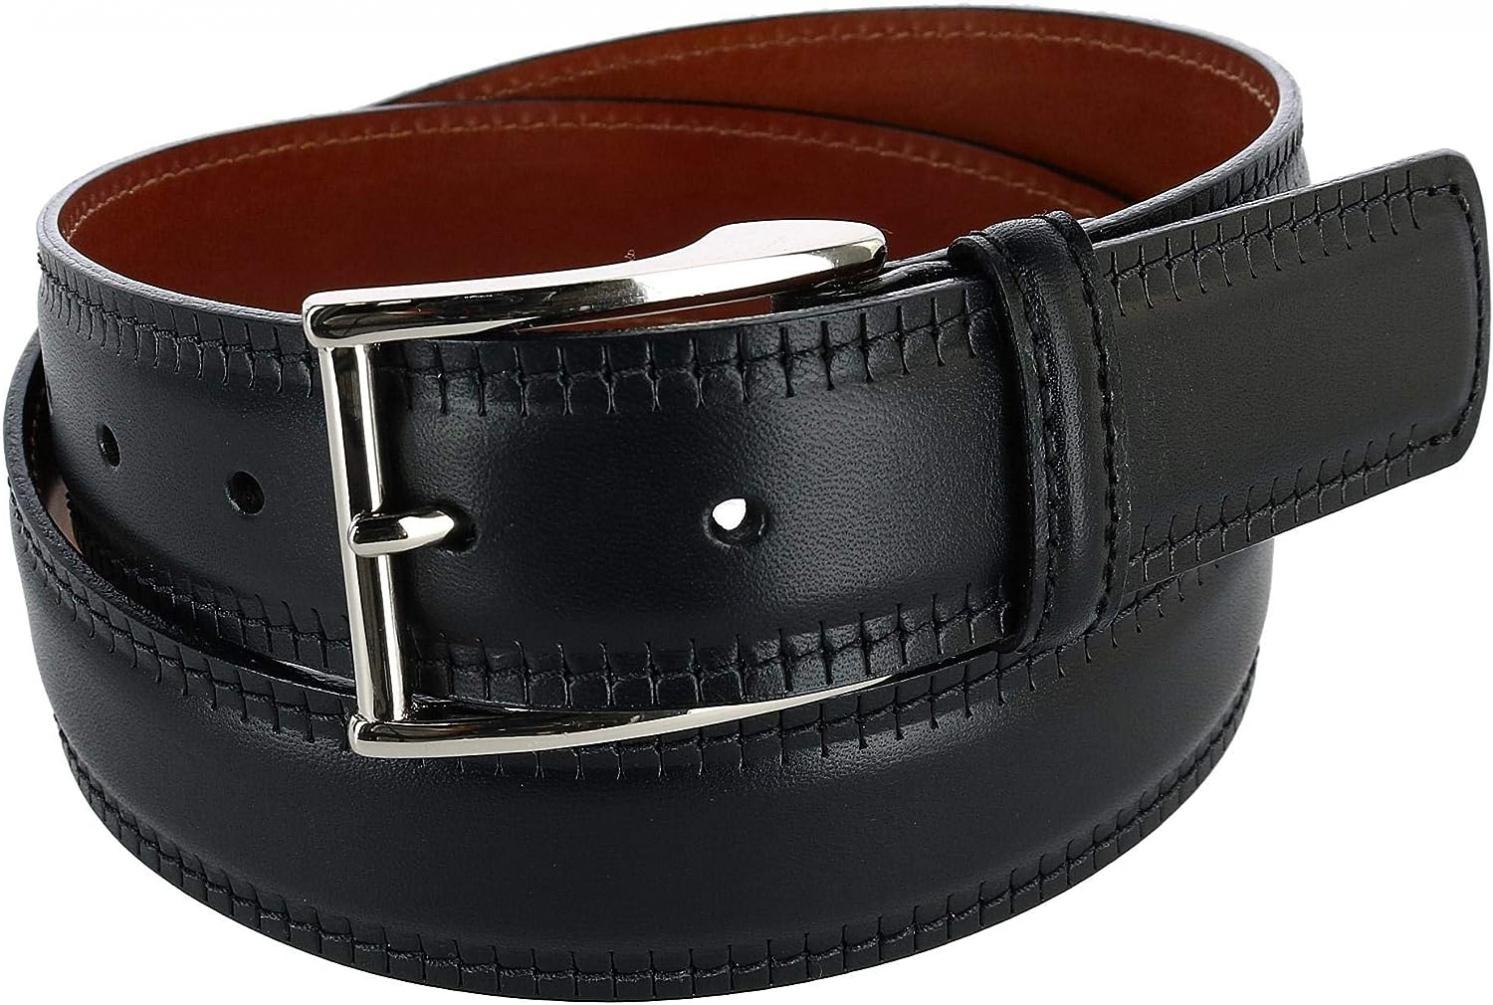 CrookhornDavis Dress Belt for Men, Calfskin Lodge Cut Edge Leather Accessories